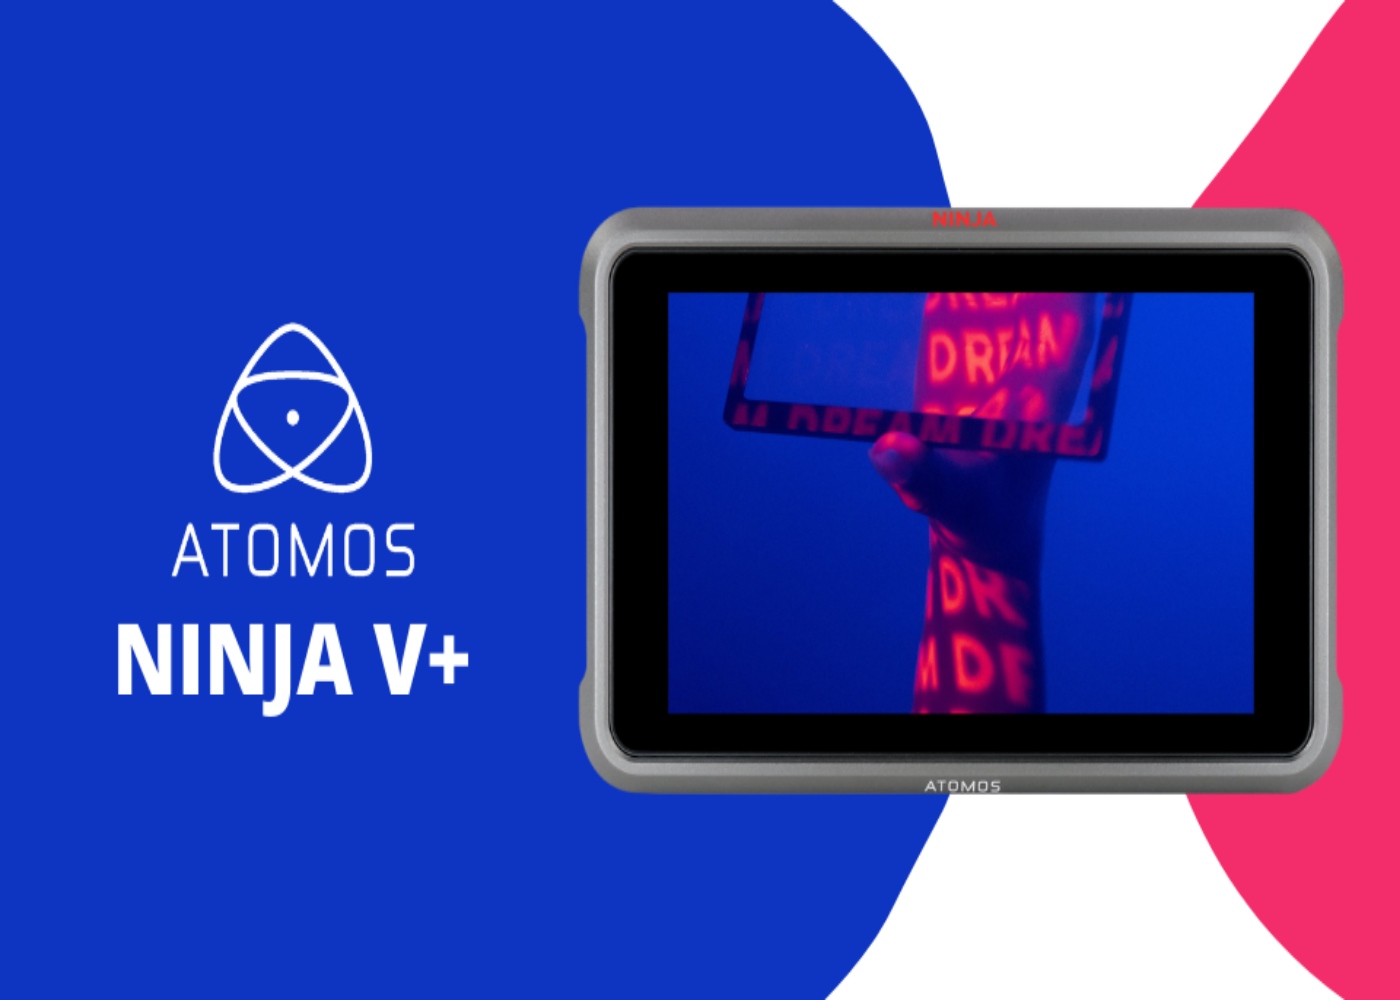 Get Excited! The Atomos Ninja V+ and Ninja V+ Pro Kit Has Arrived